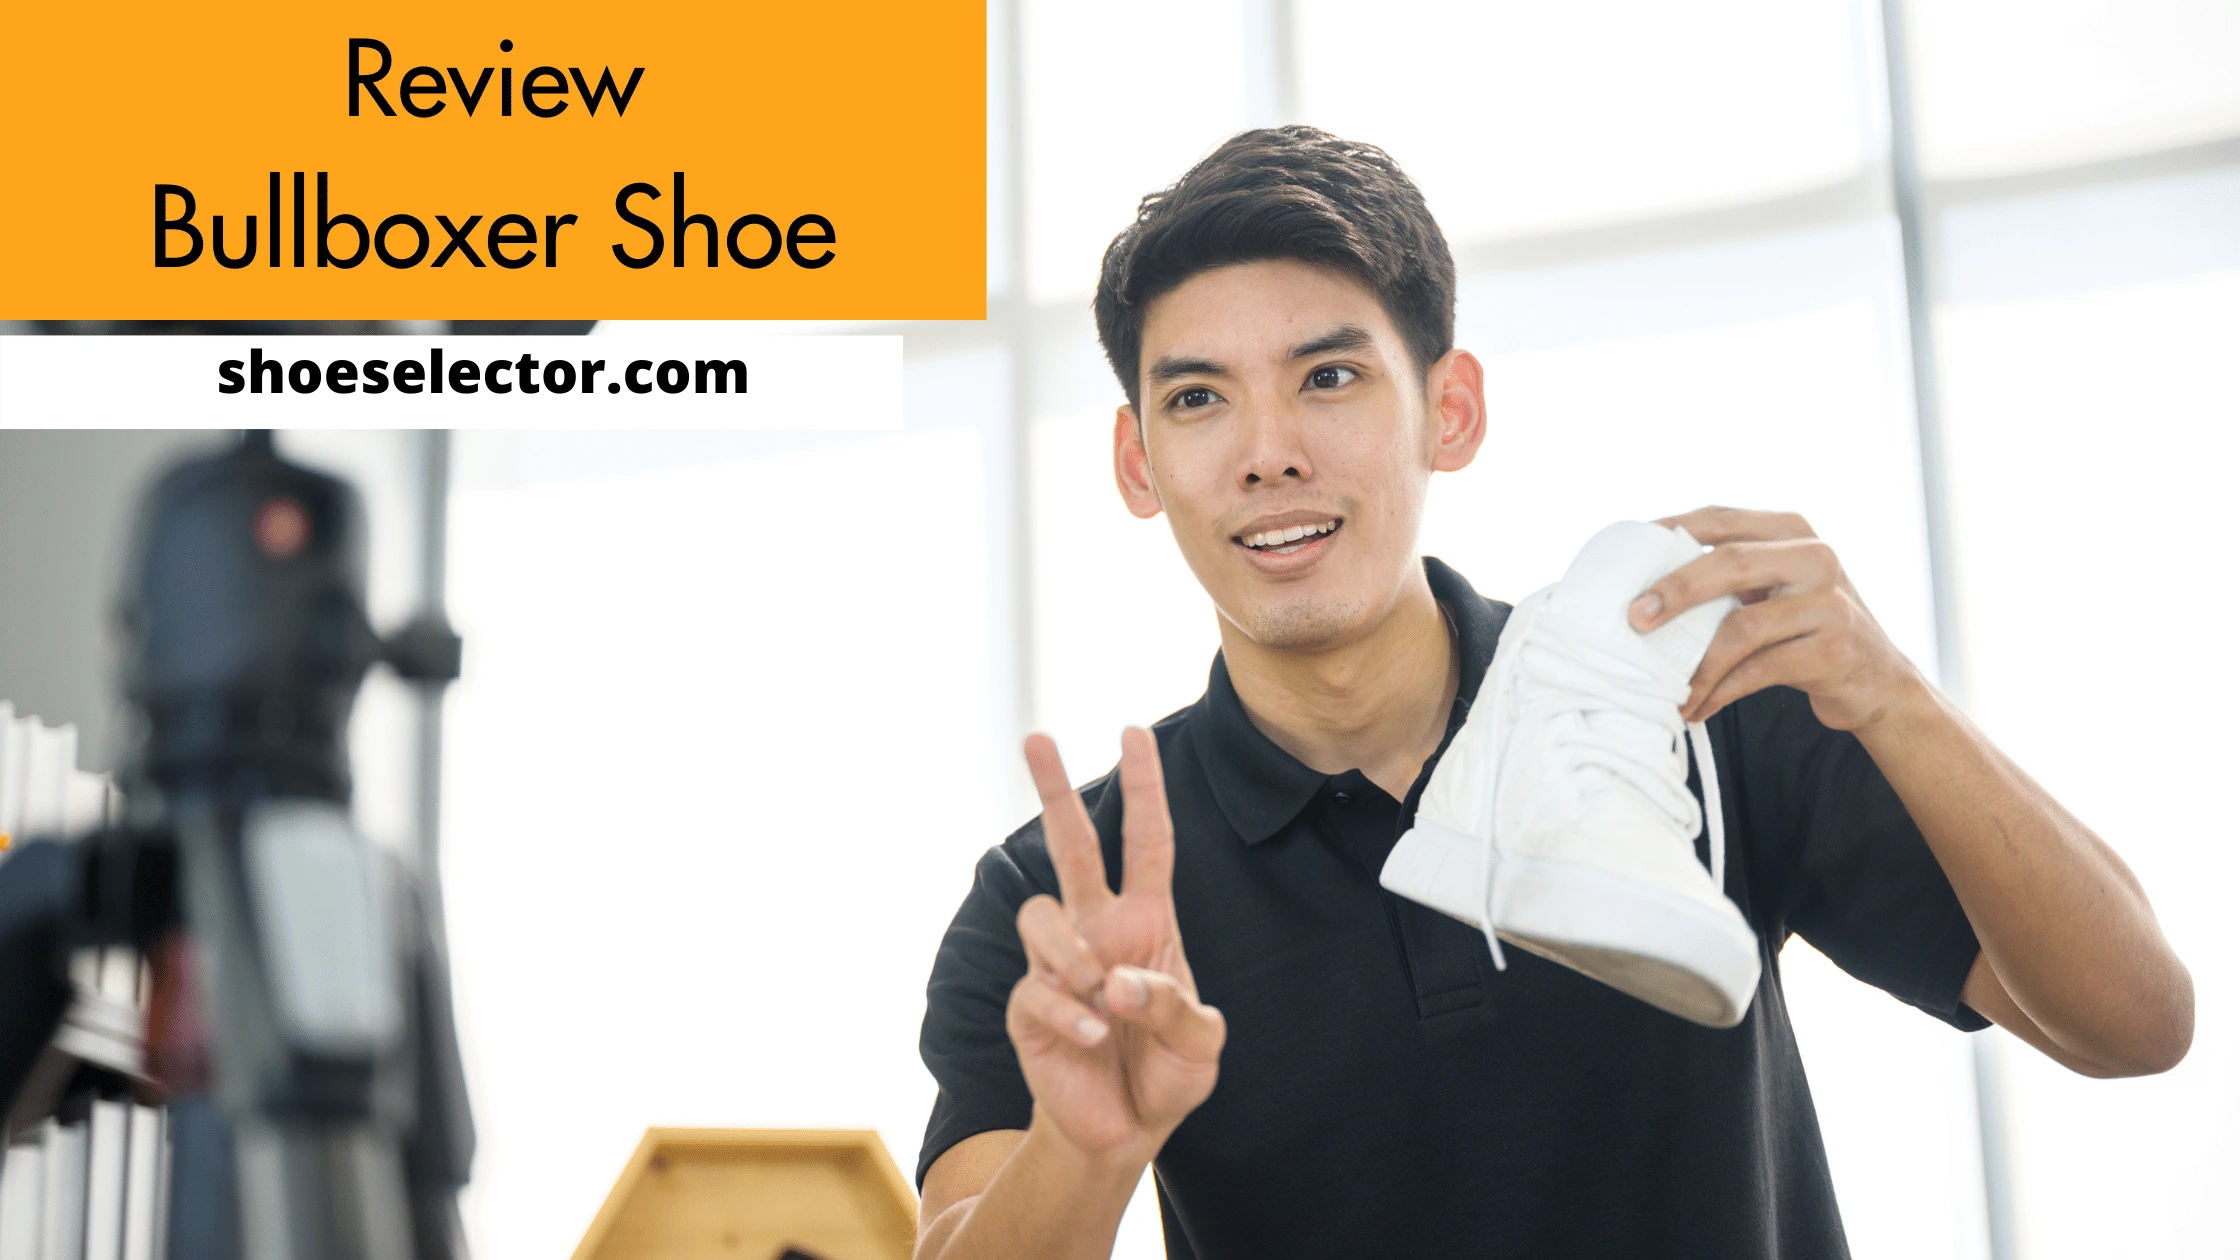 Bullboxer Shoe Reviews - Top Expert's Choice